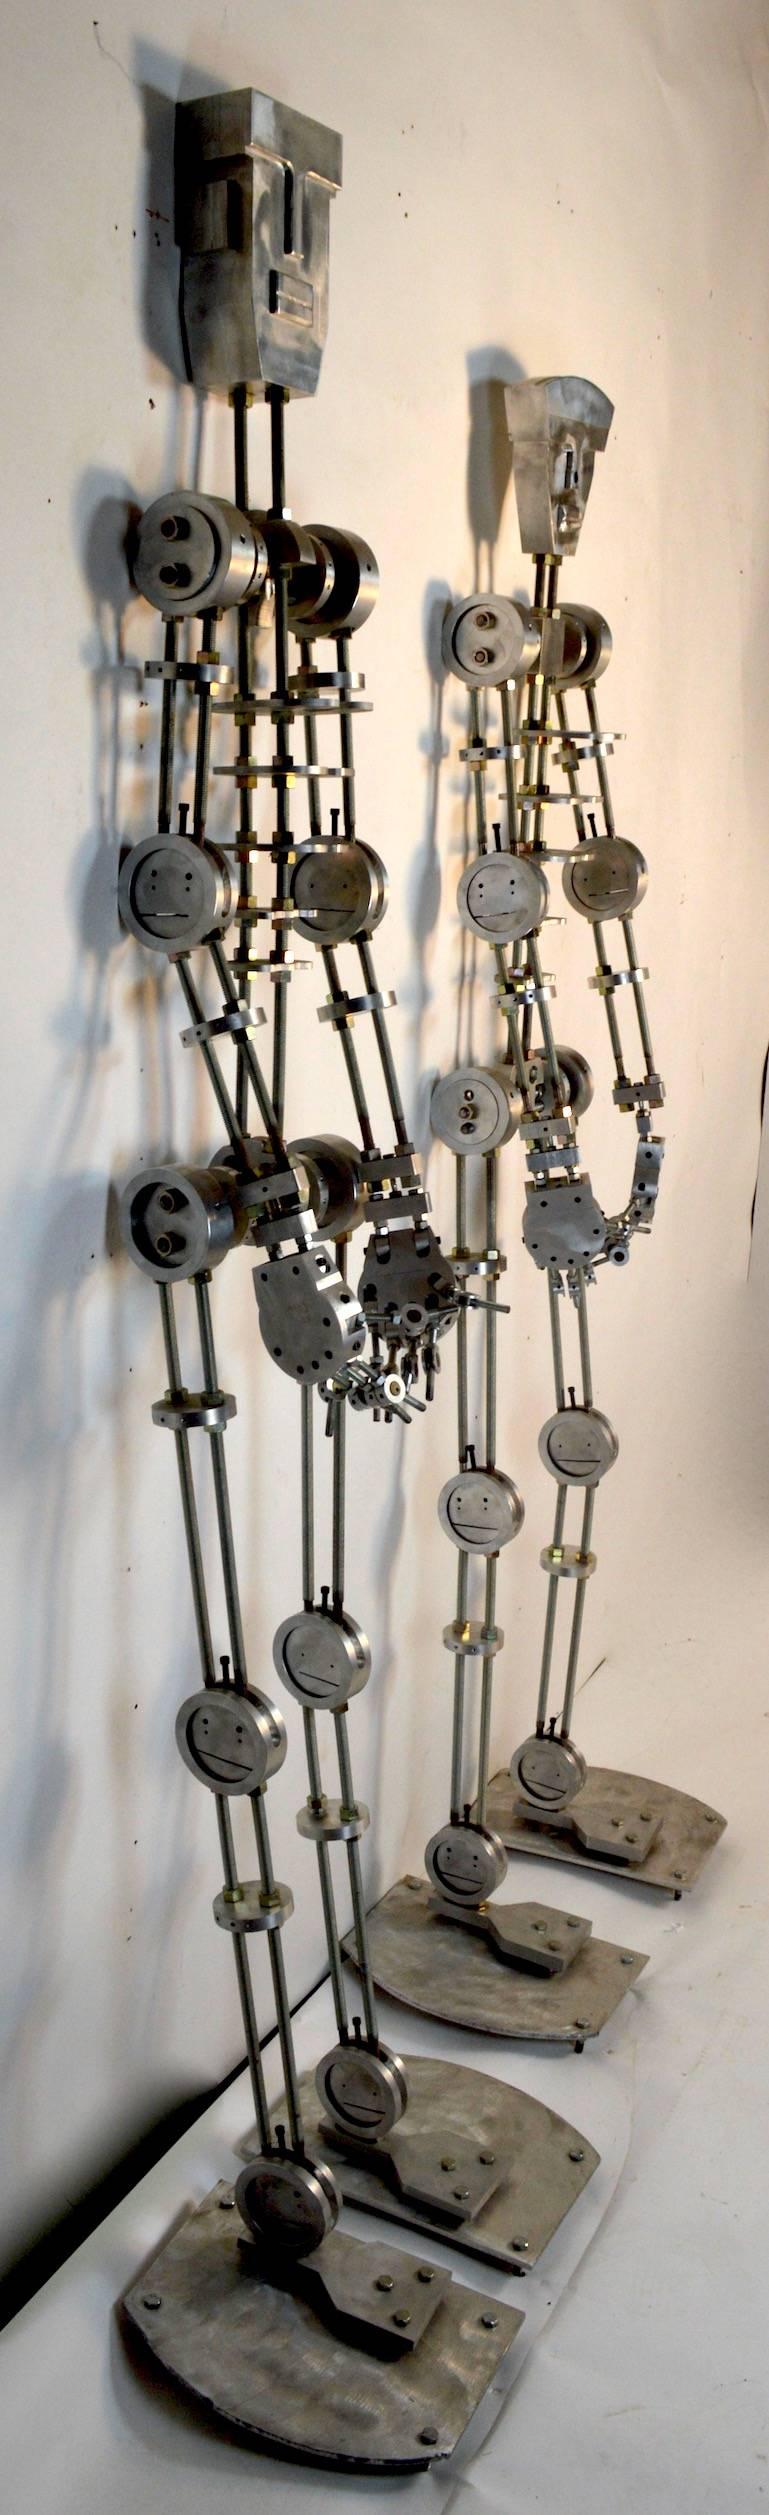 Aluminum Artist Made Machine Skeleton Man and Woman